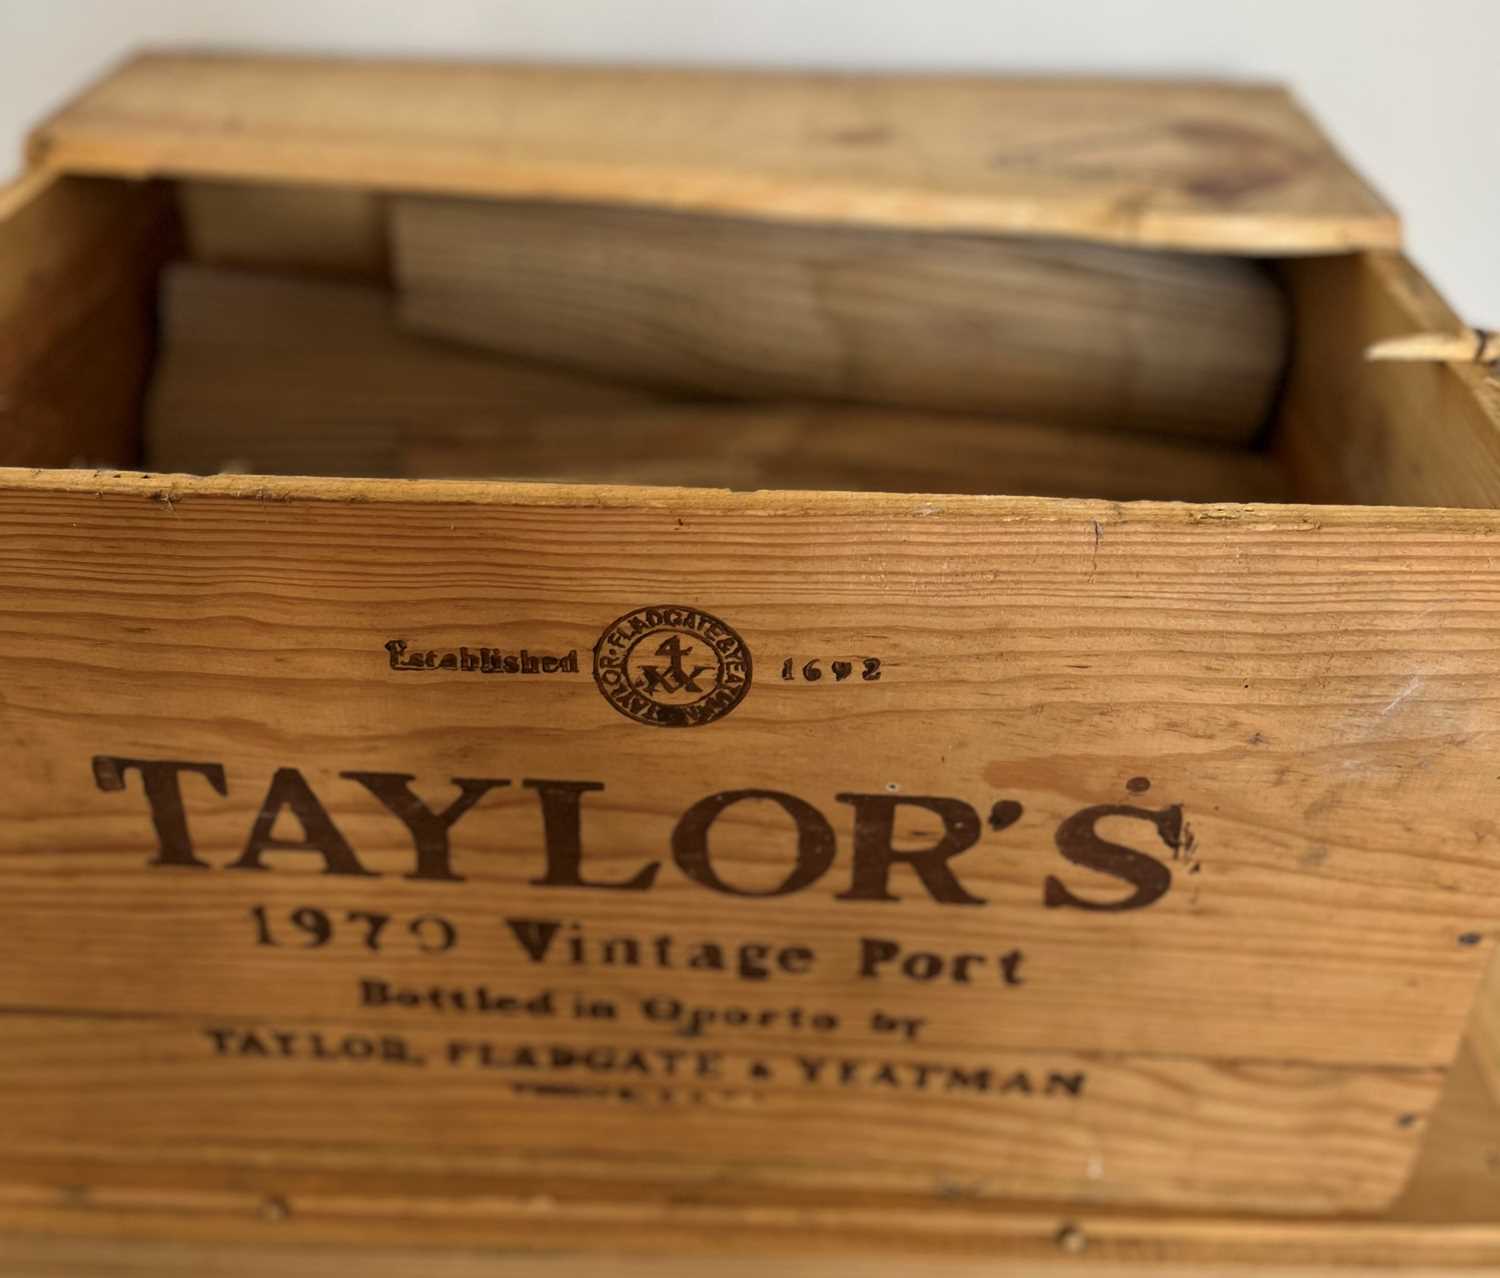 Lot 27 - 6 Bottles in OWC Taylors Vintage Port 1970